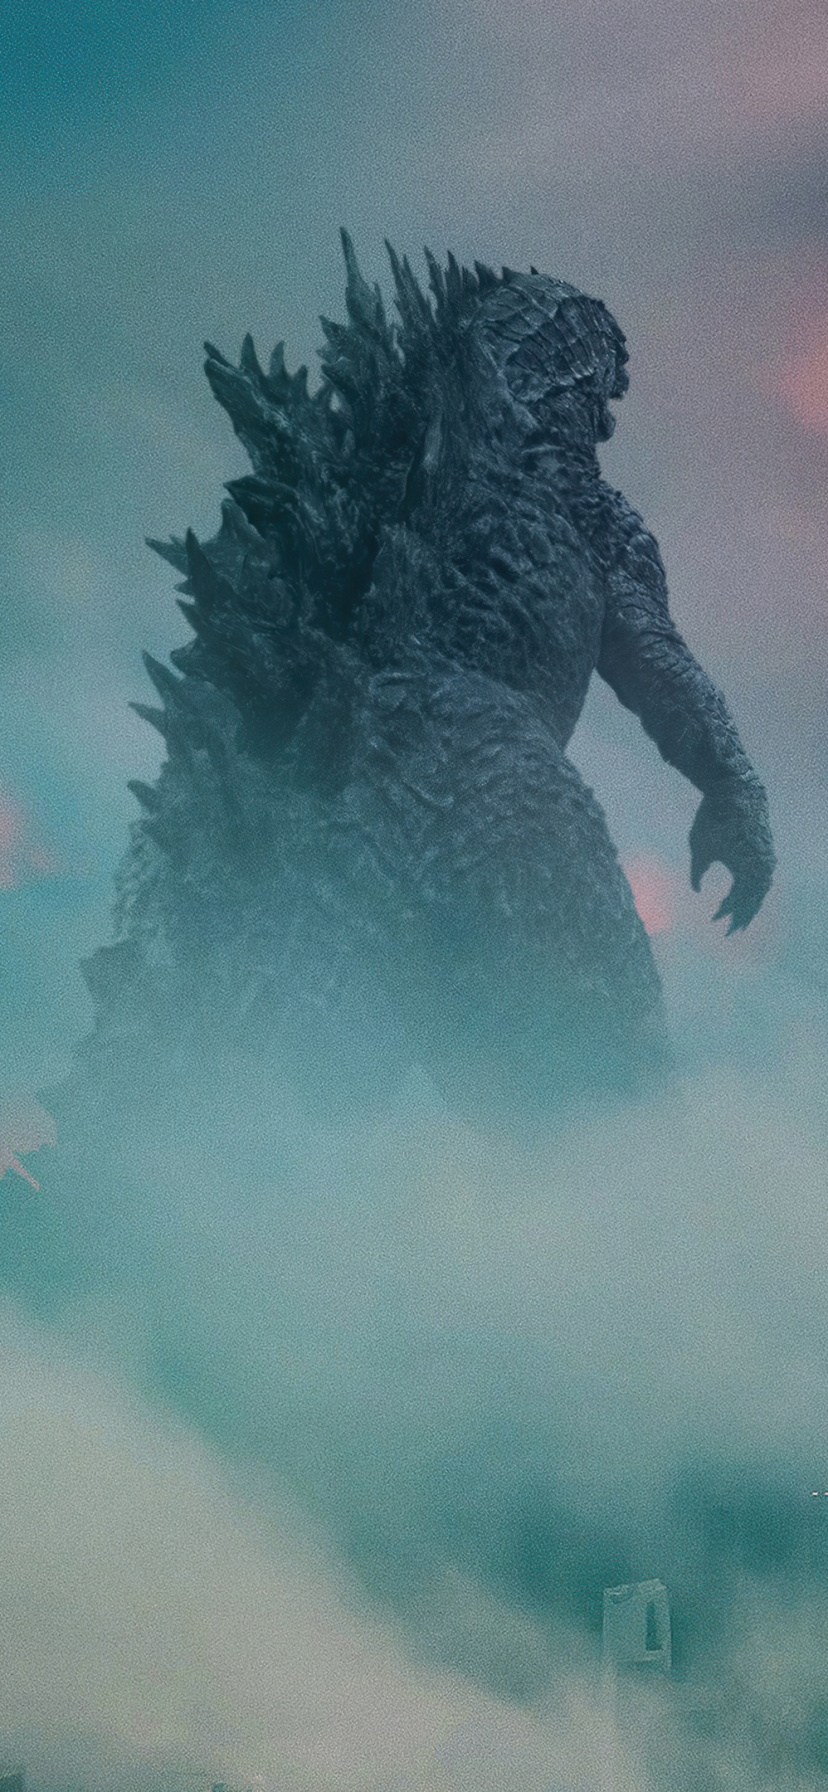 Descarga gratuita de fondo de pantalla para móvil de Películas, Godzilla, Godzilla (Monsterverso), Godzilla Vs Kong.